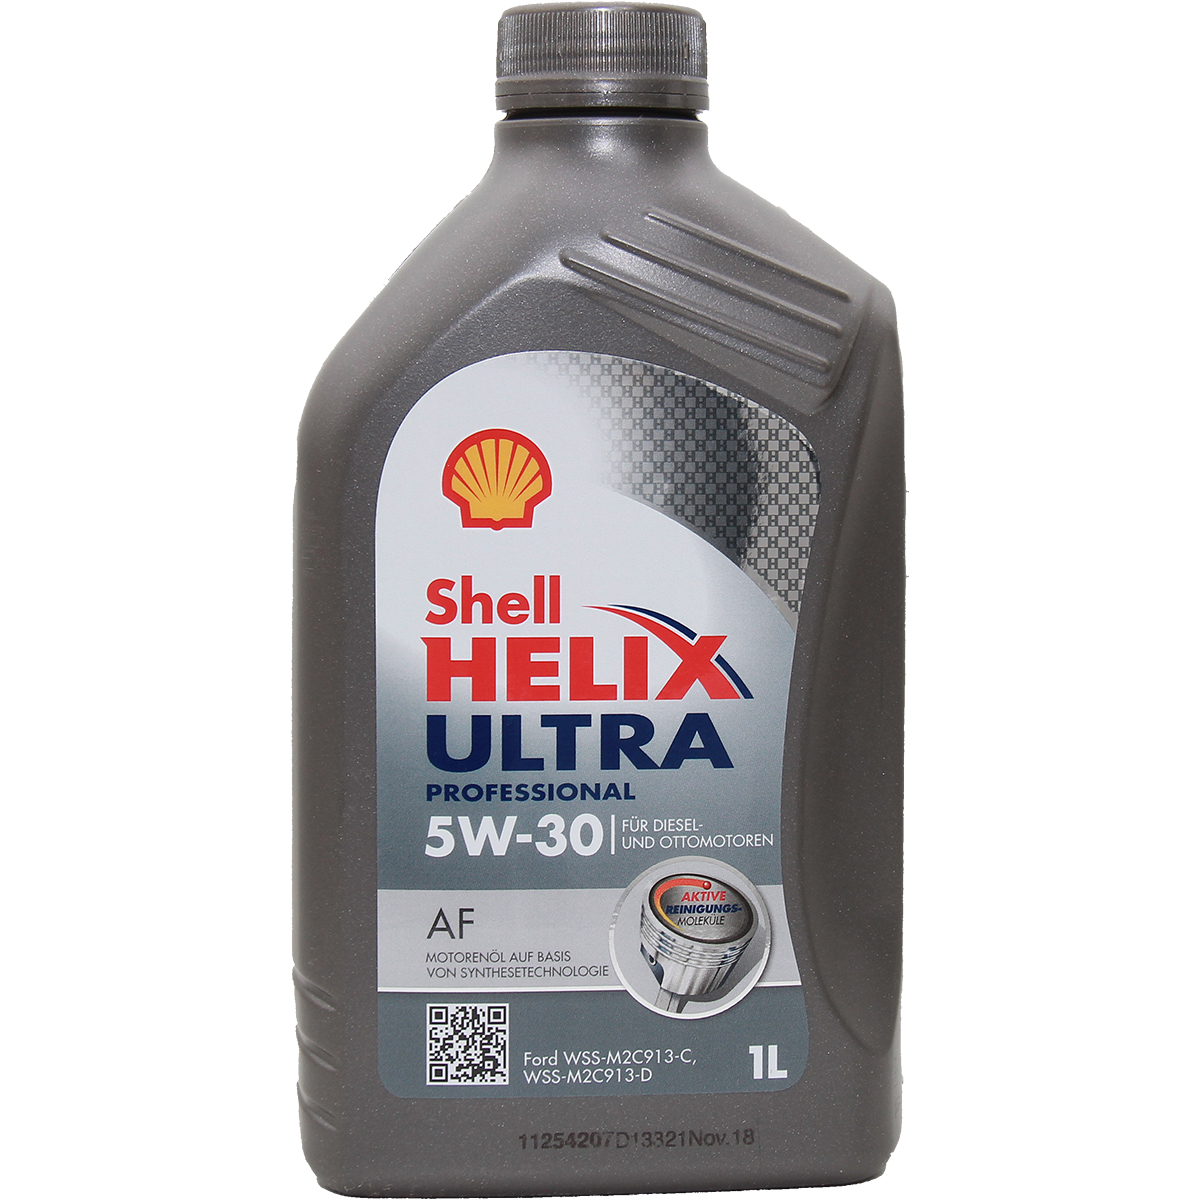 Shell Helix Ultra Professional AF 5W-30 1 Liter